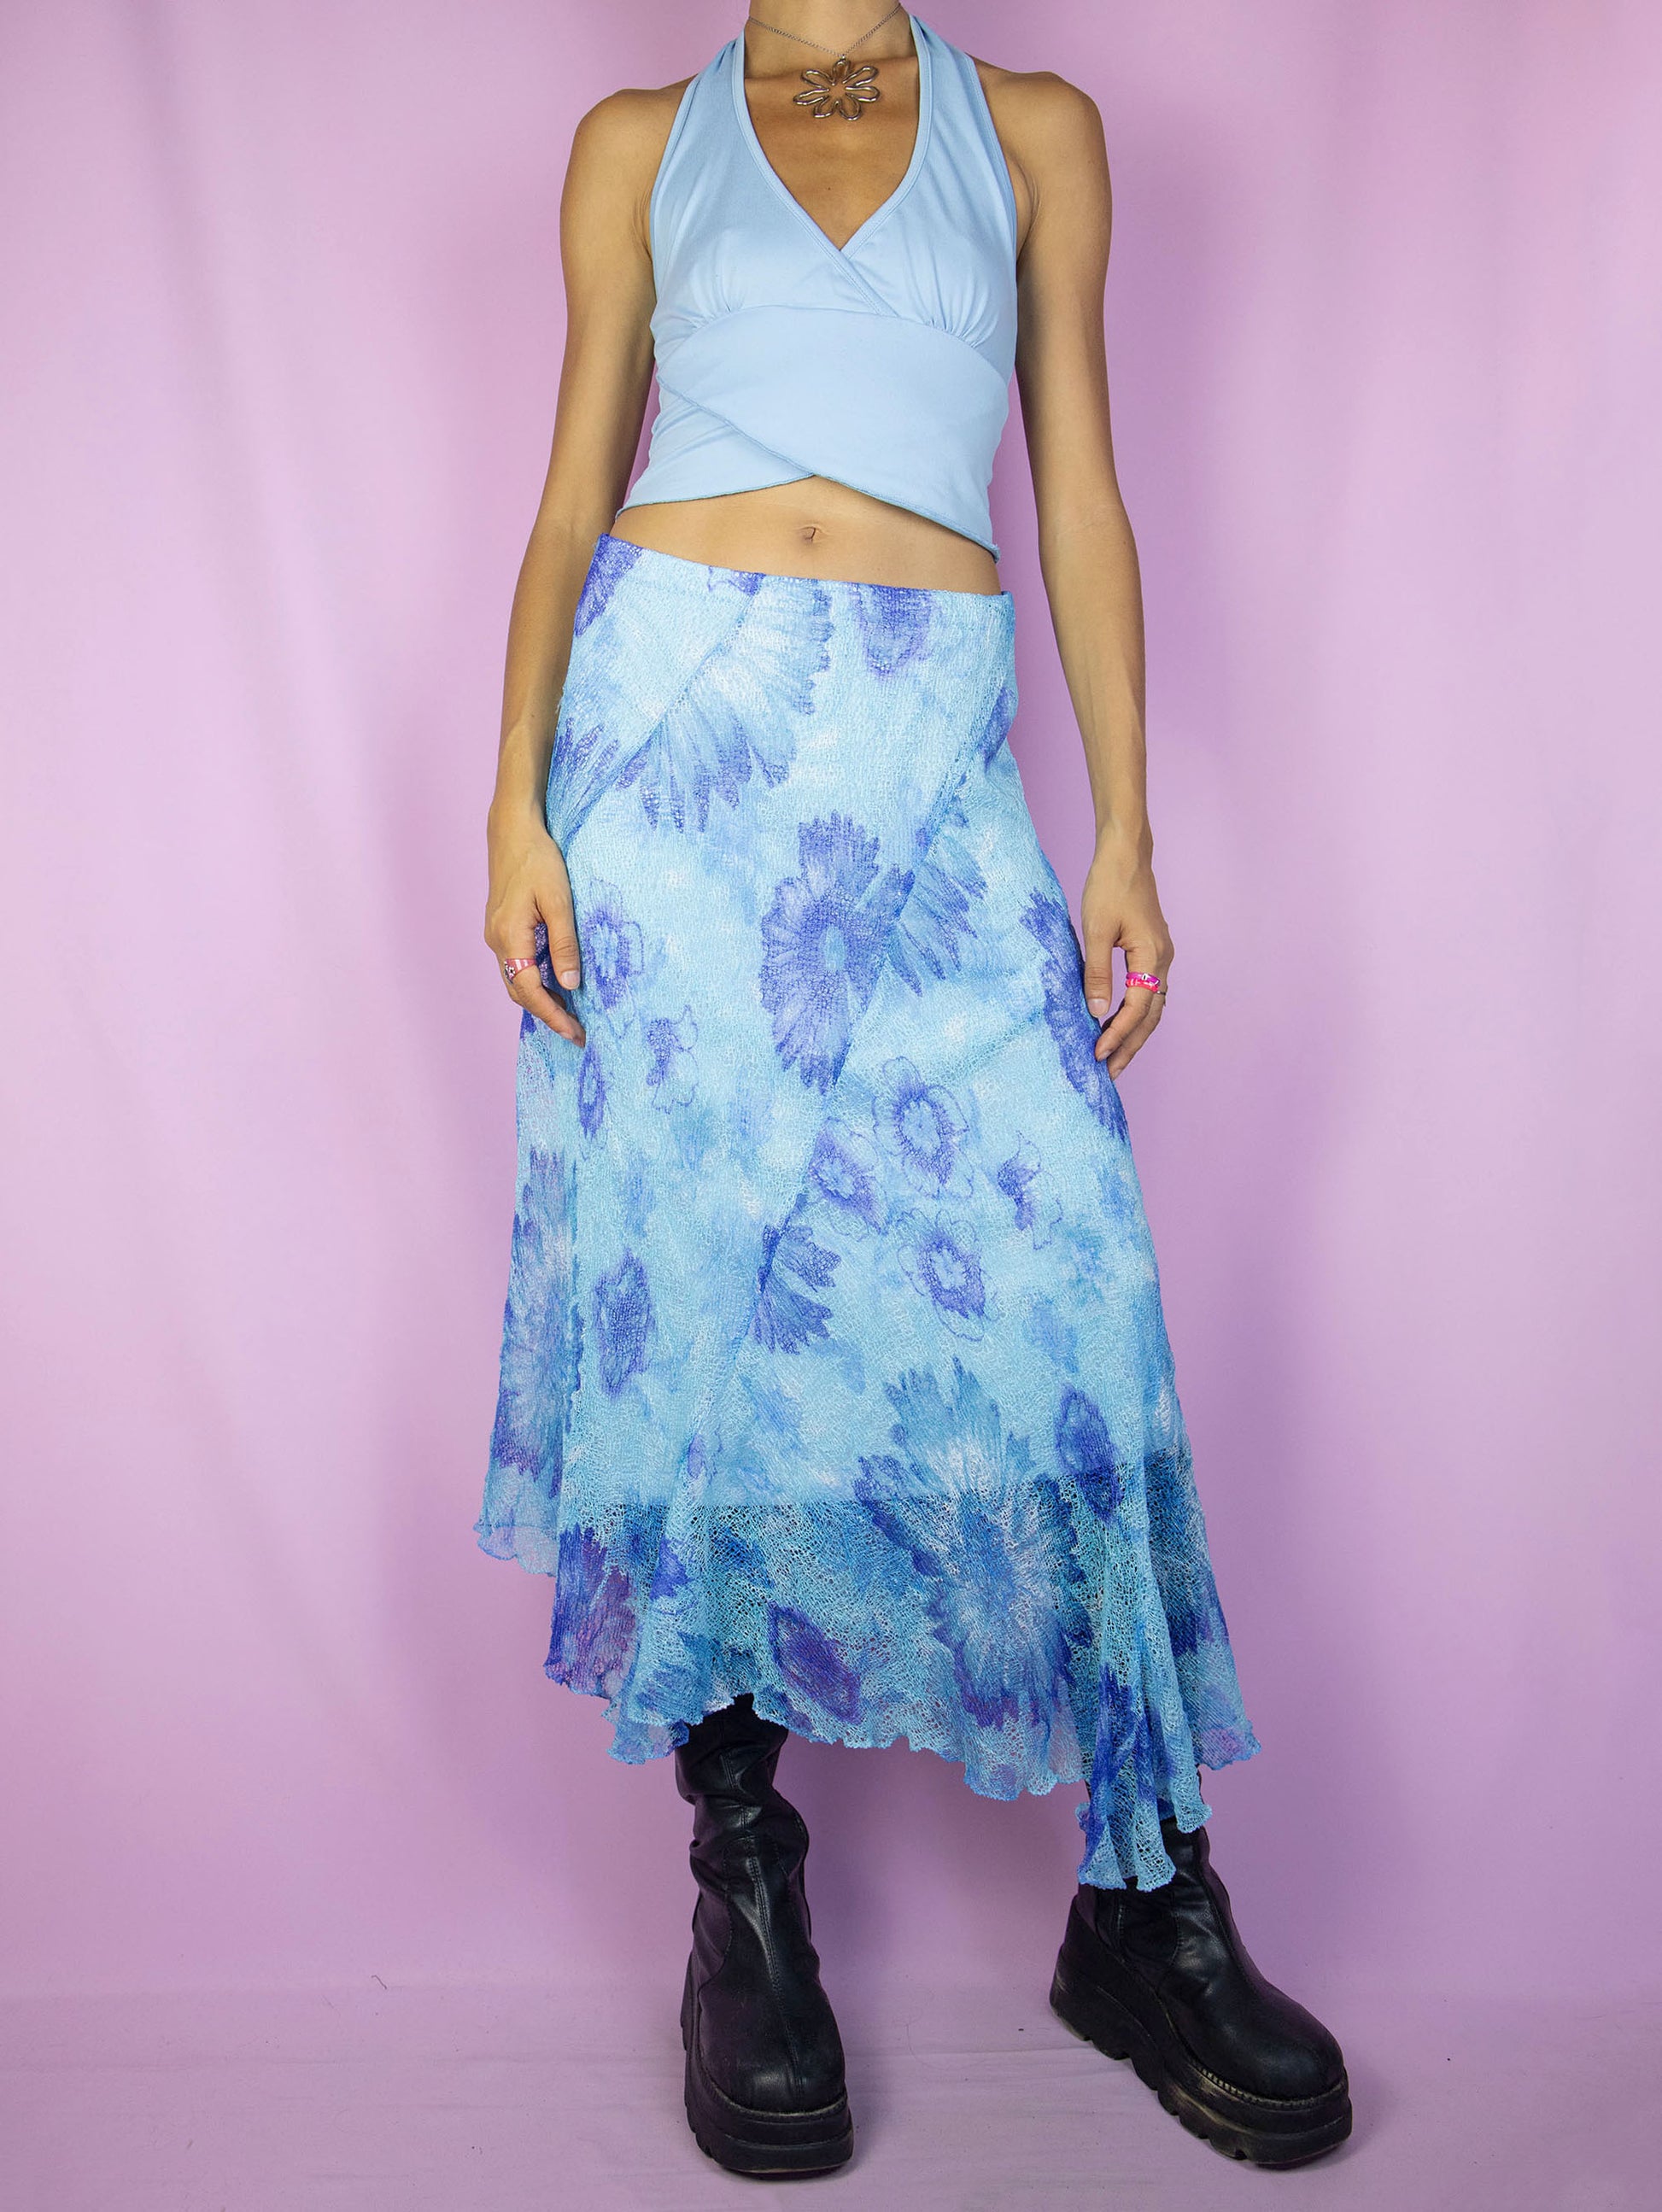 The Y2K Blue Mesh Midi Skirt is a vintage asymmetrical floral graphic skirt with an elastic waist. Boho fairy grunge 2000s summer maxi skirt.